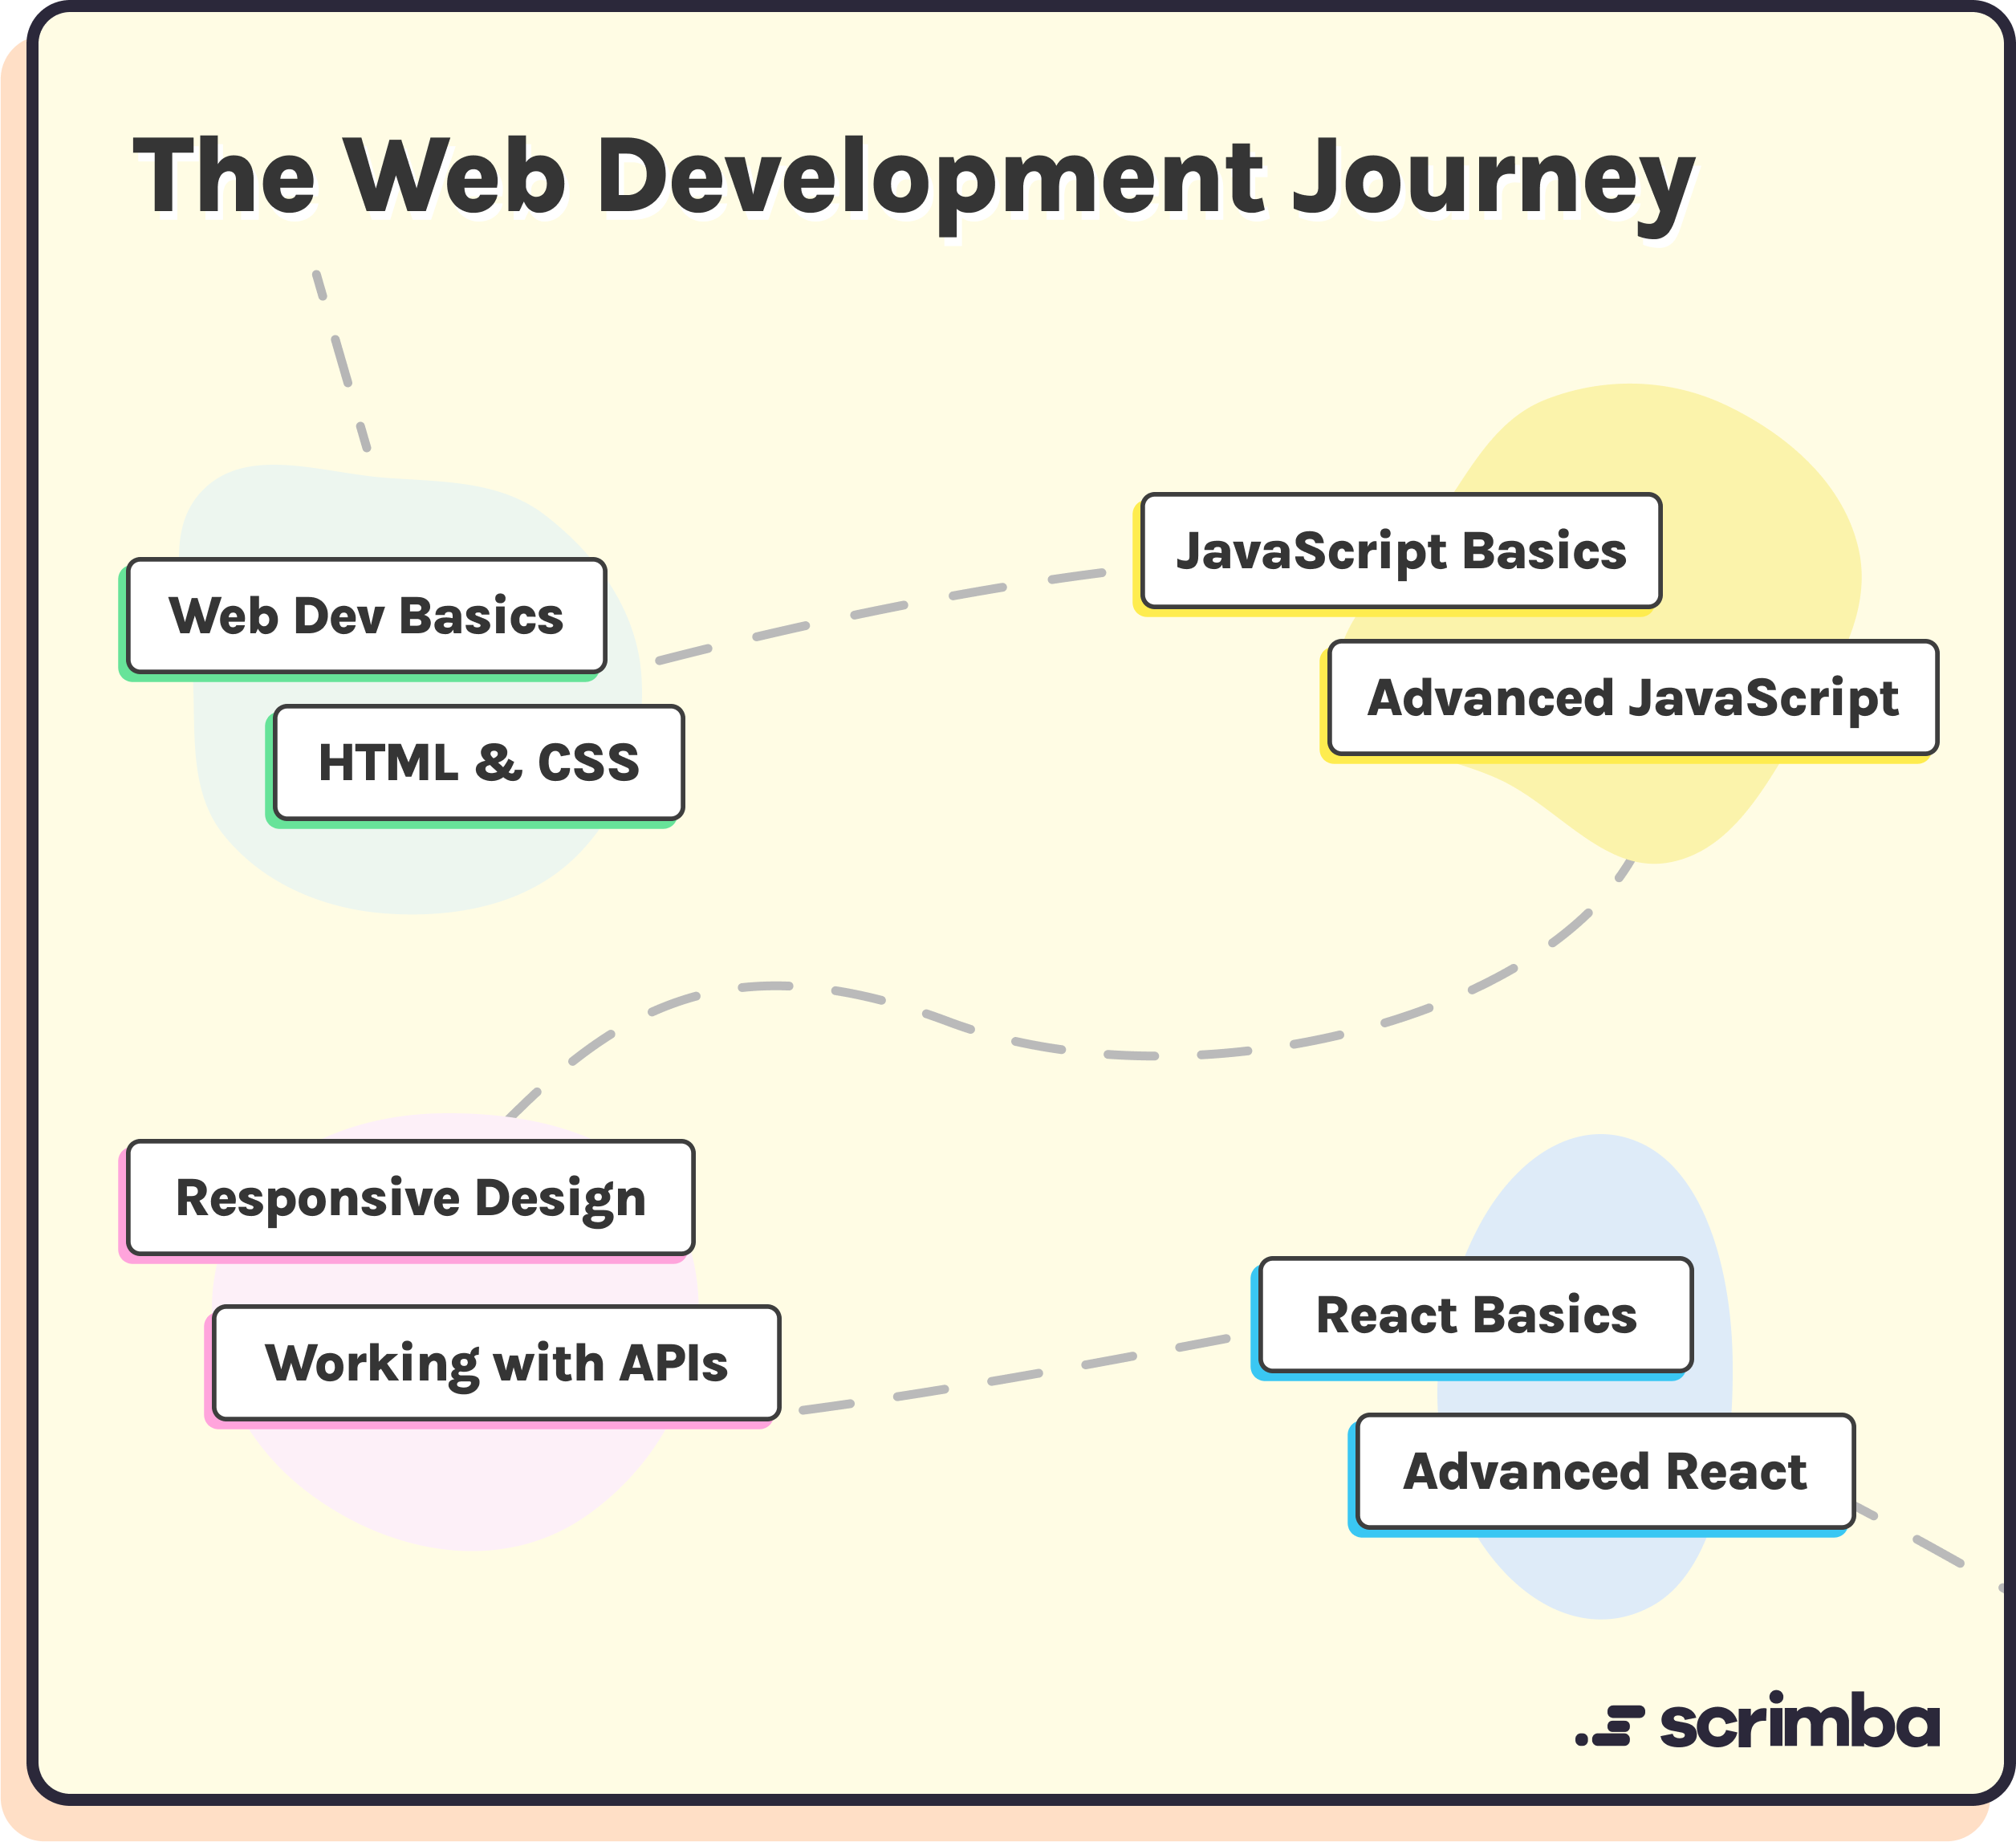 The Web Development Journey